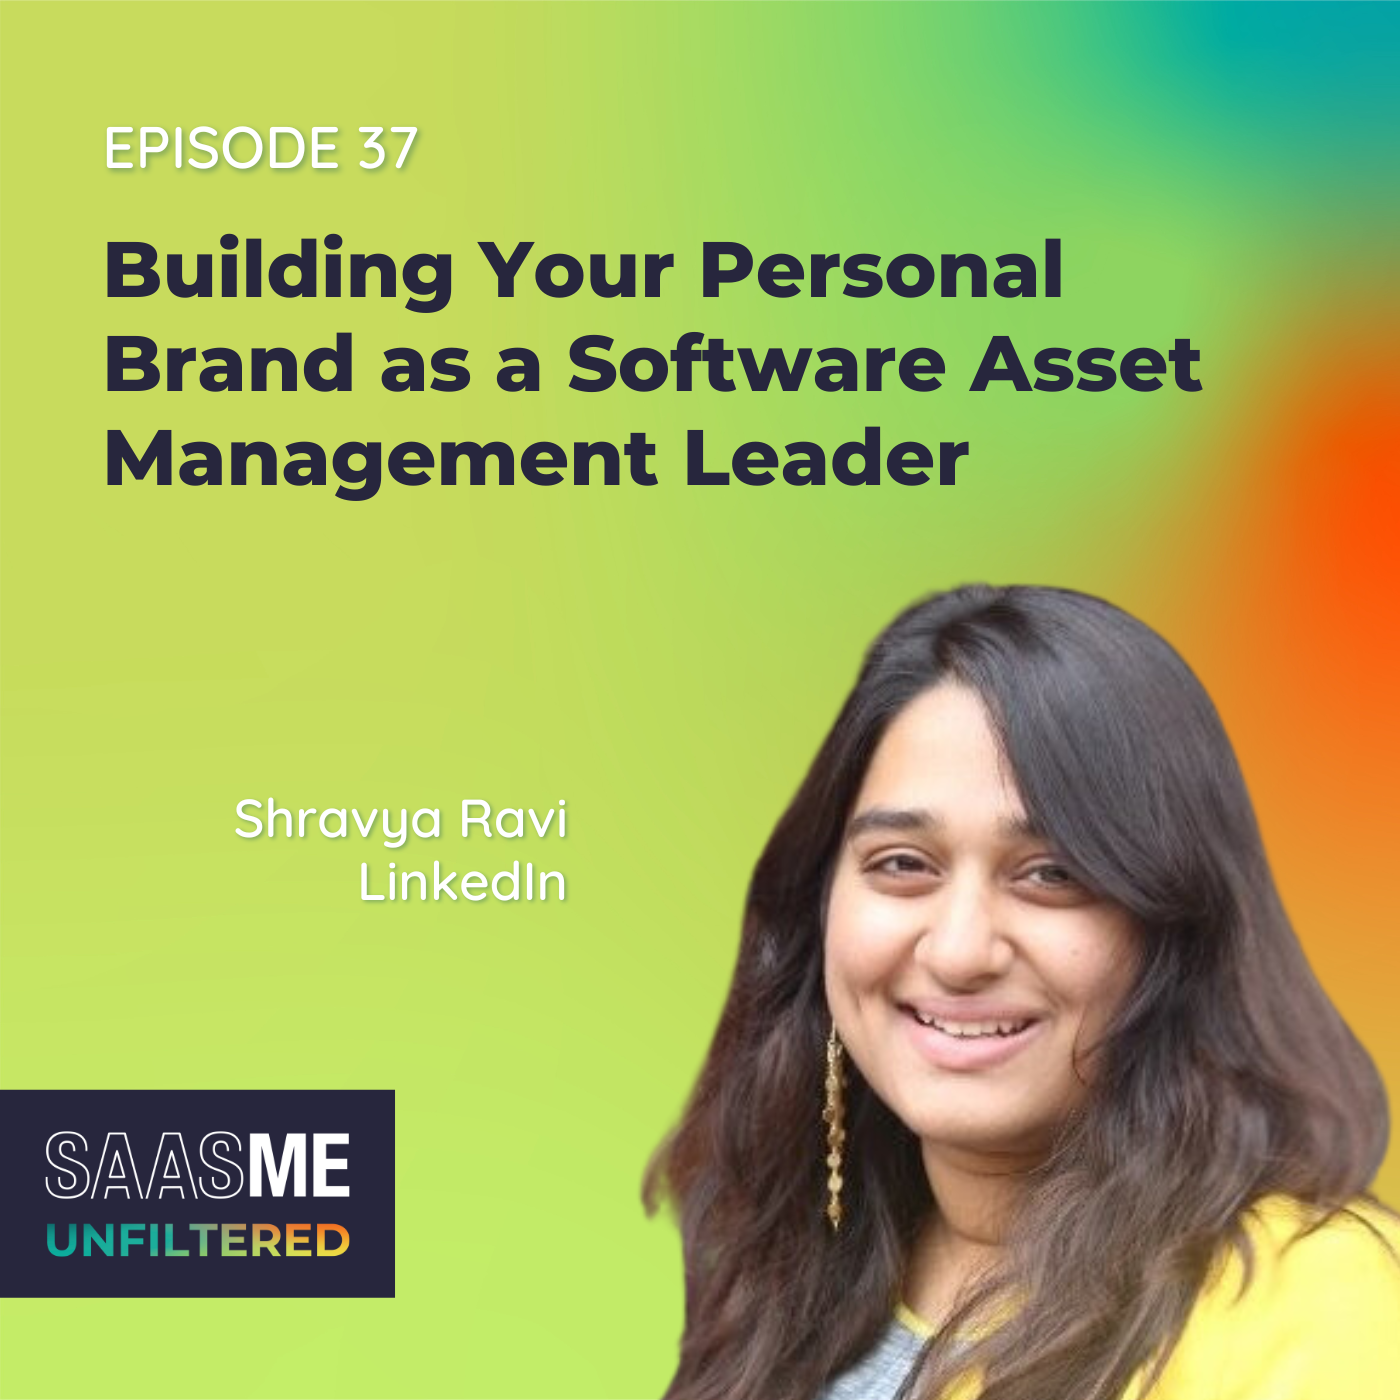 Shravya Ravi: Building Your Personal Brand as a Software Asset Management Leader